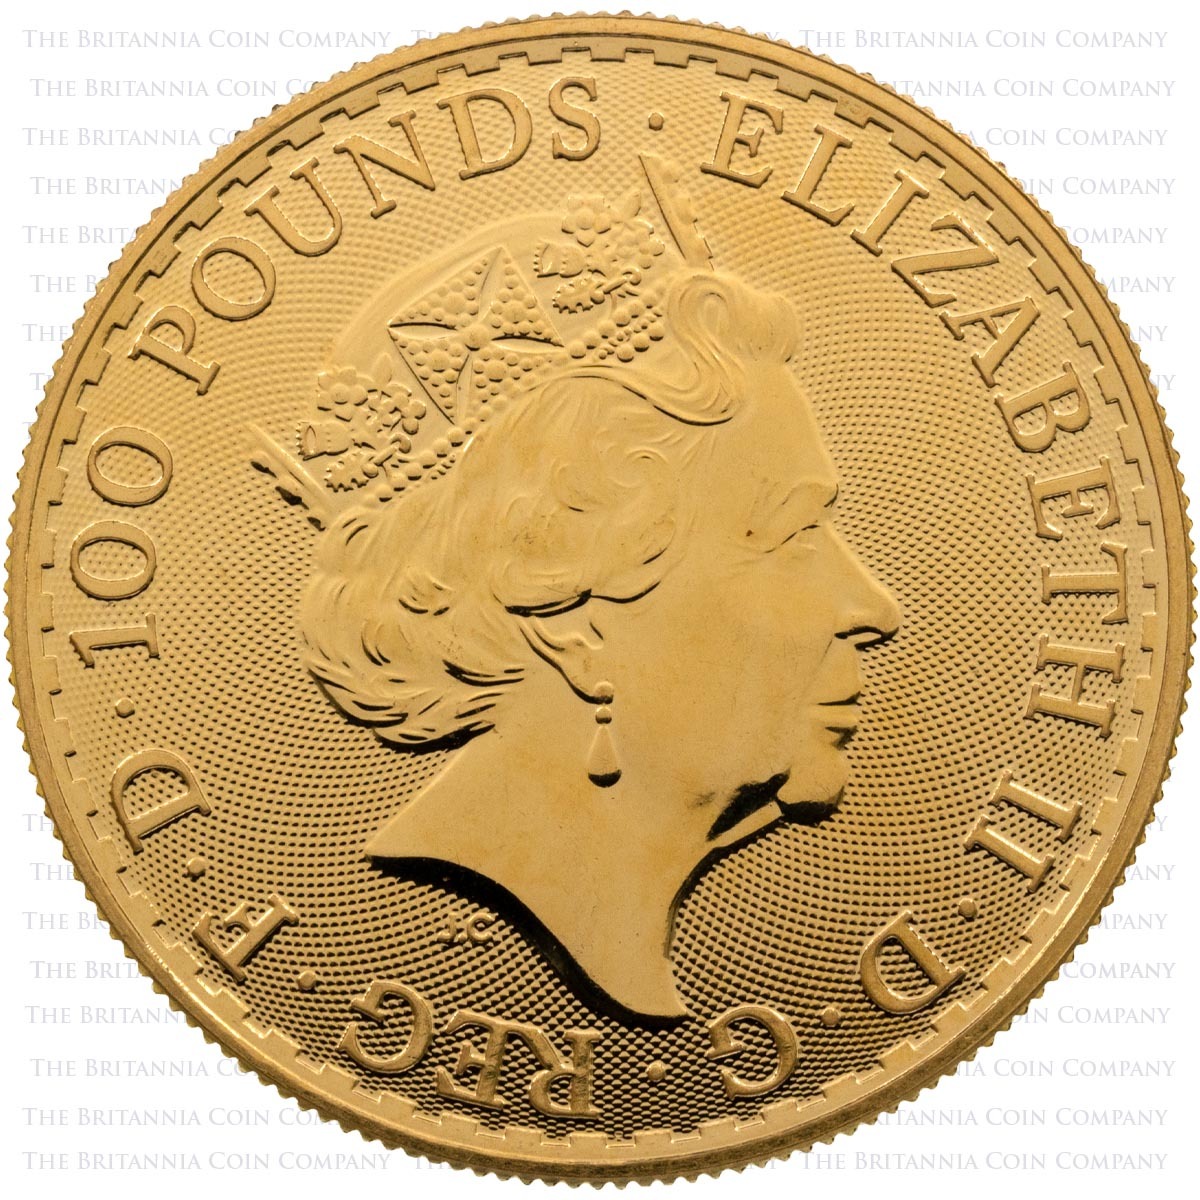 One Ounce 24 Carat Gold Mixed-Date Britannia Bullion Coins (Best Value) Obverse